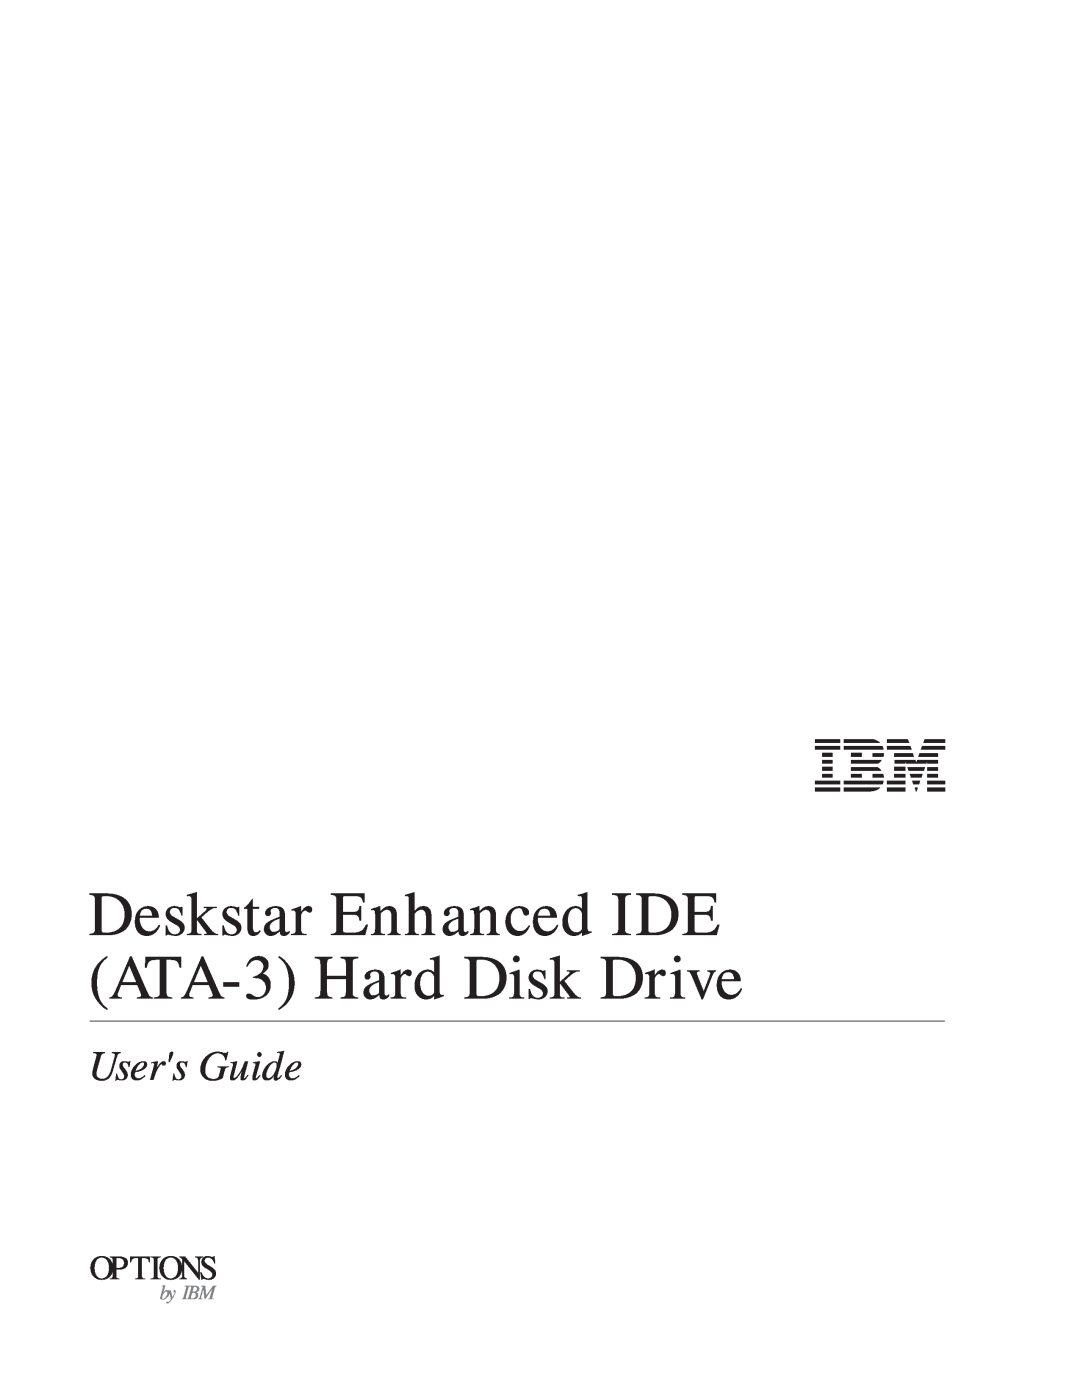 IBM manual Deskstar Enhanced IDE ATA-3 Hard Disk Drive, Users Guide, Options, by IBM 